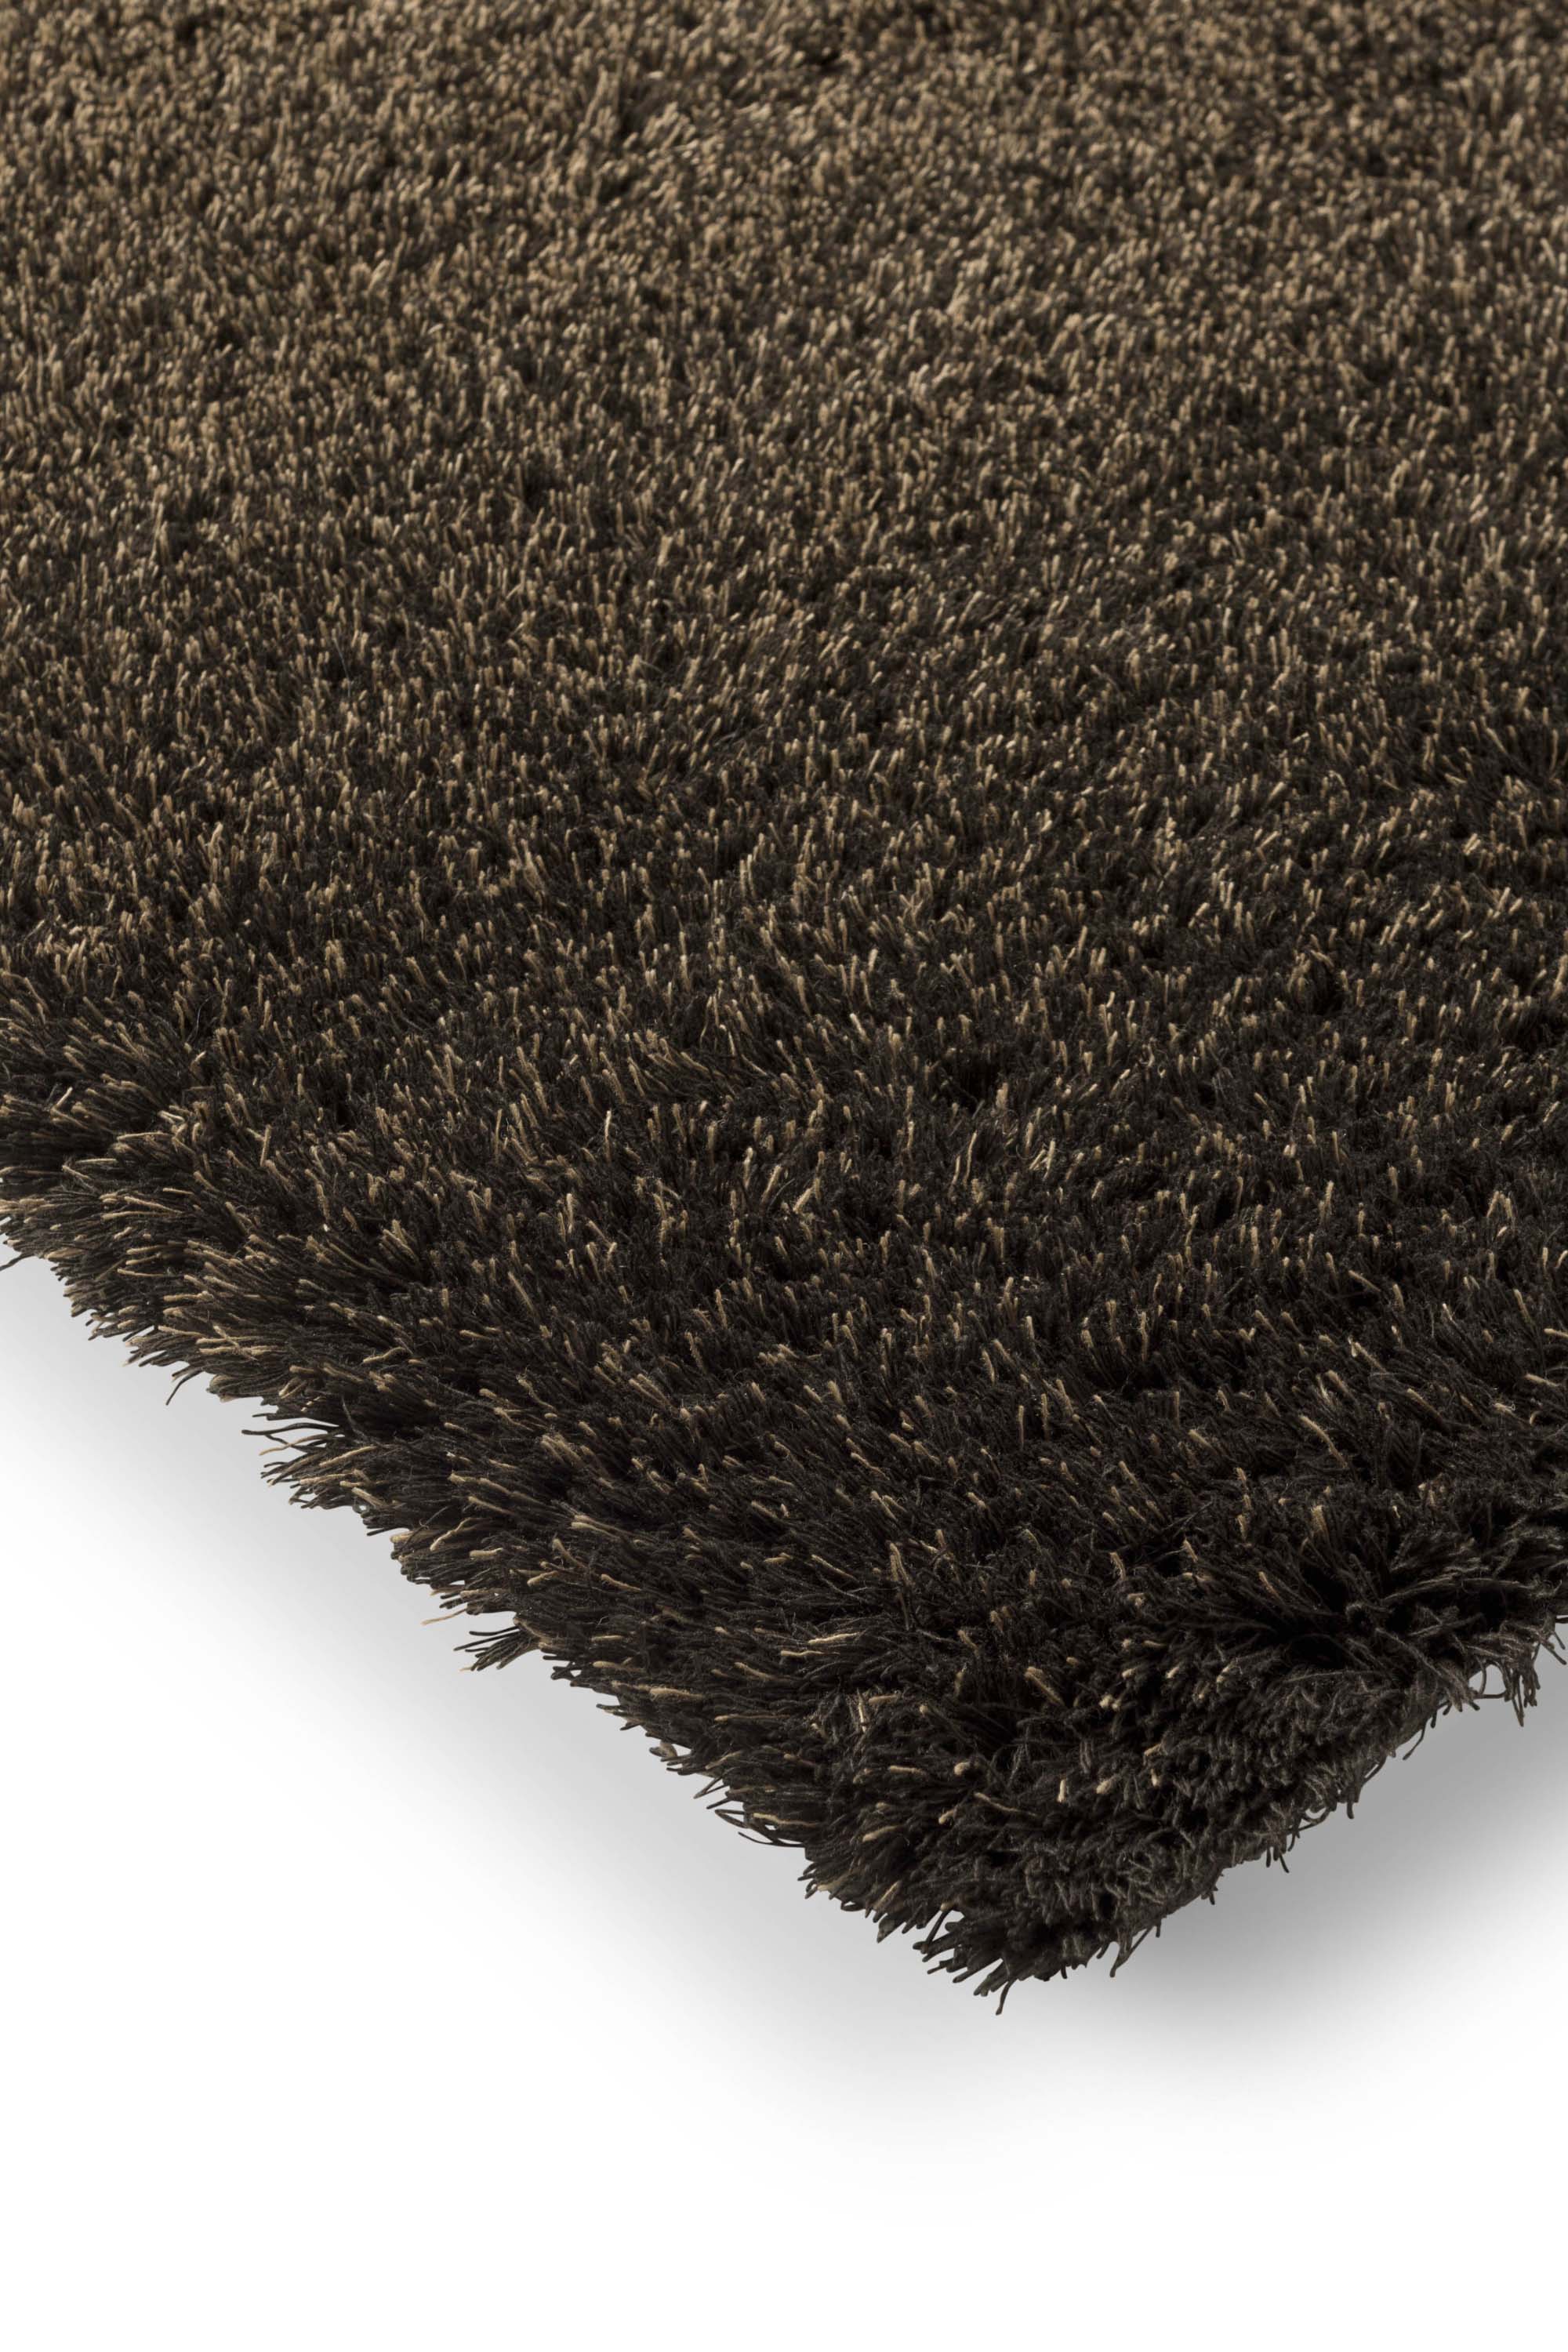 Plain brown rug with shaggy pile